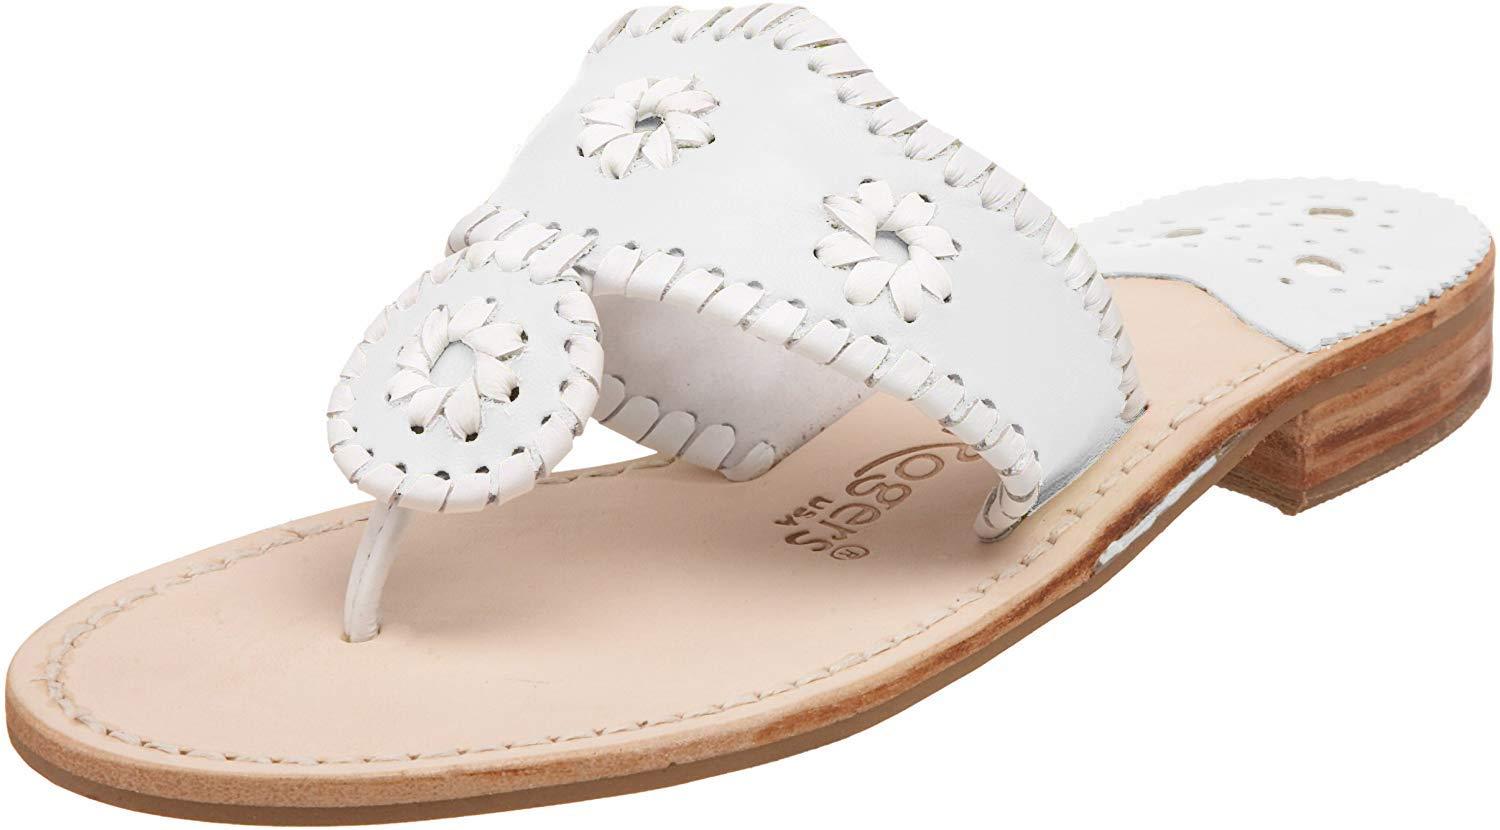 Jack Rogers Palm Beach Classic Sandal,white,8 M - Lyst